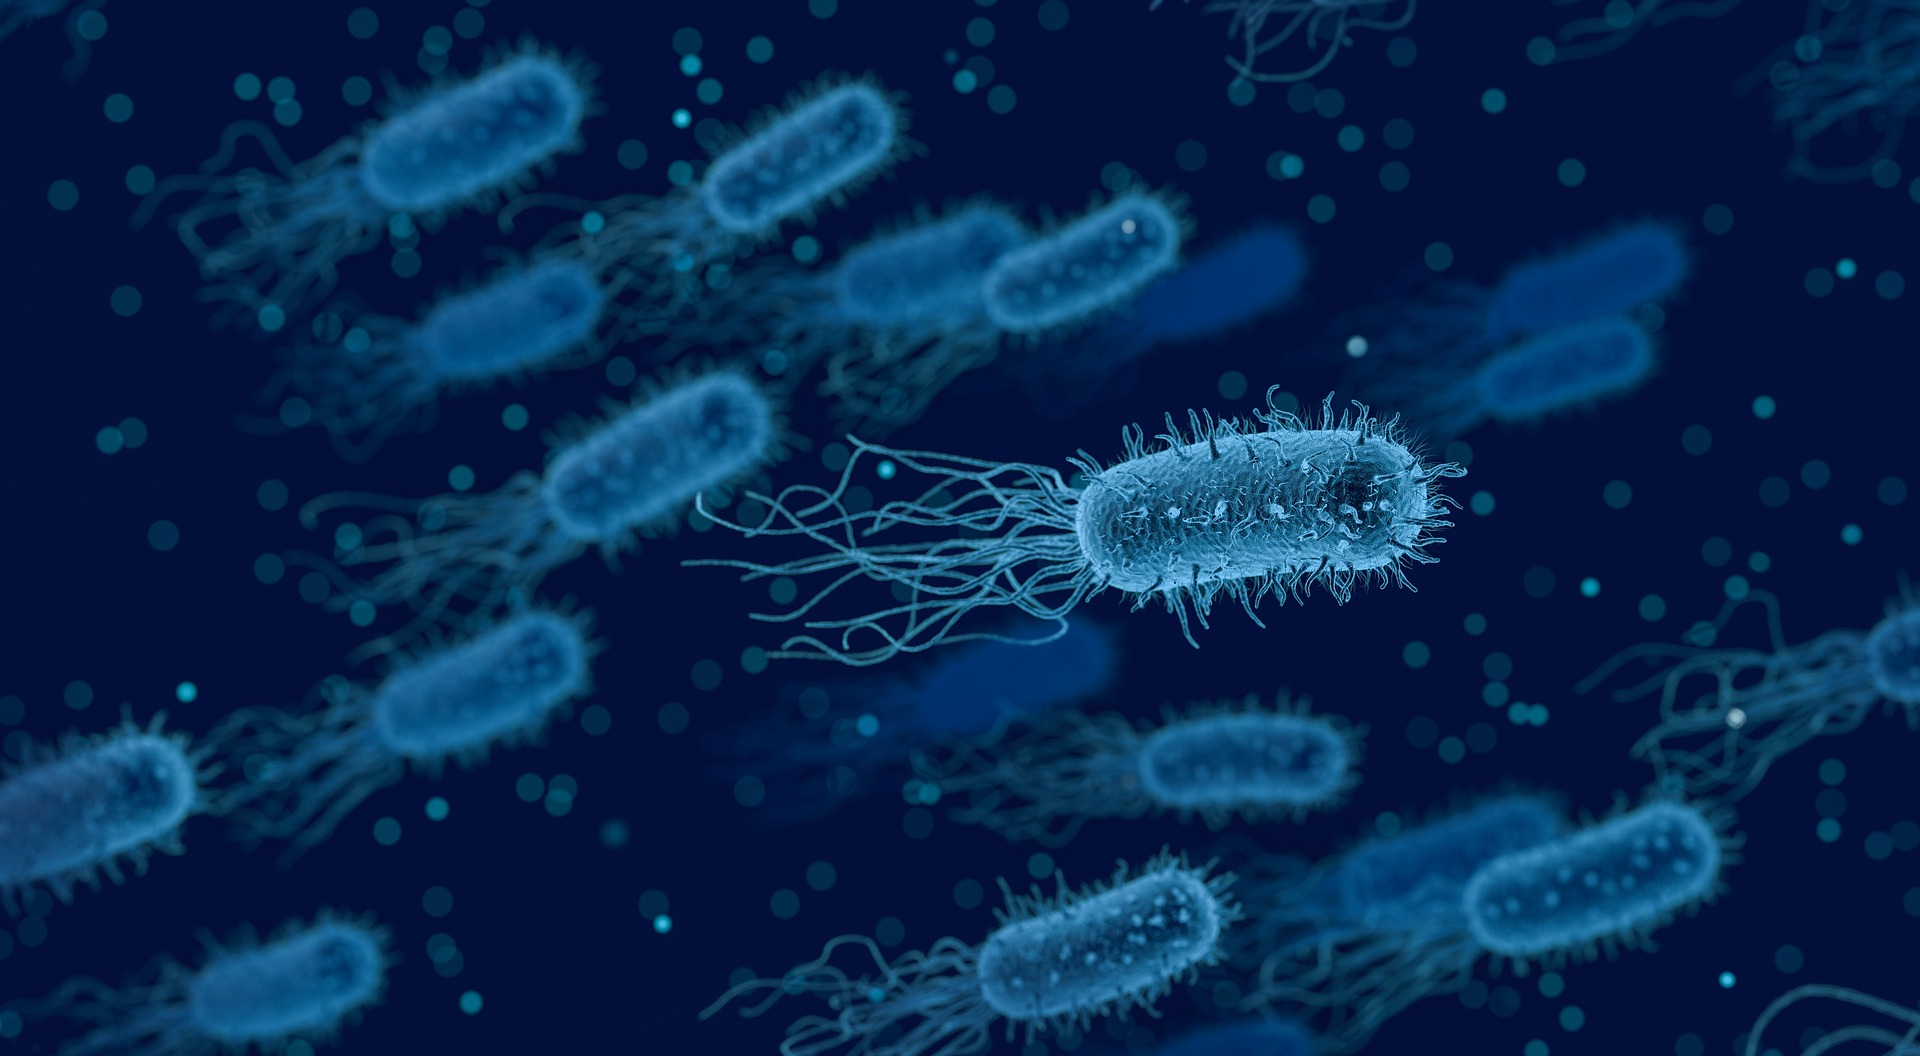 Bacteria swimming